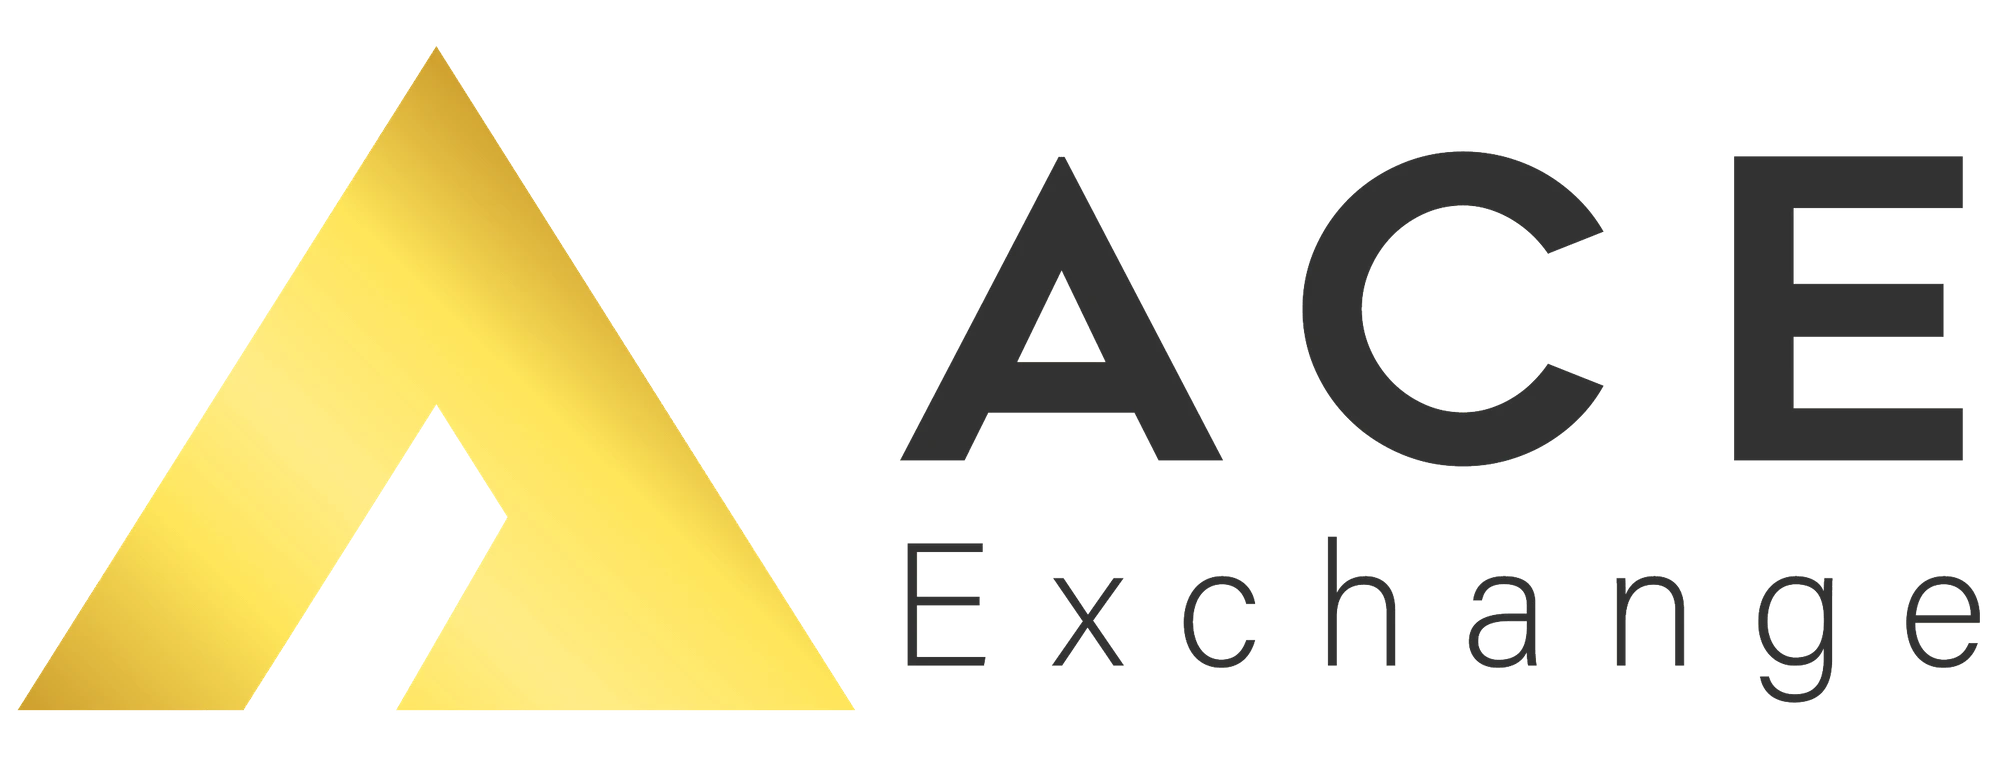 ace exchange founder arrested for fraud 65b97d9b53055